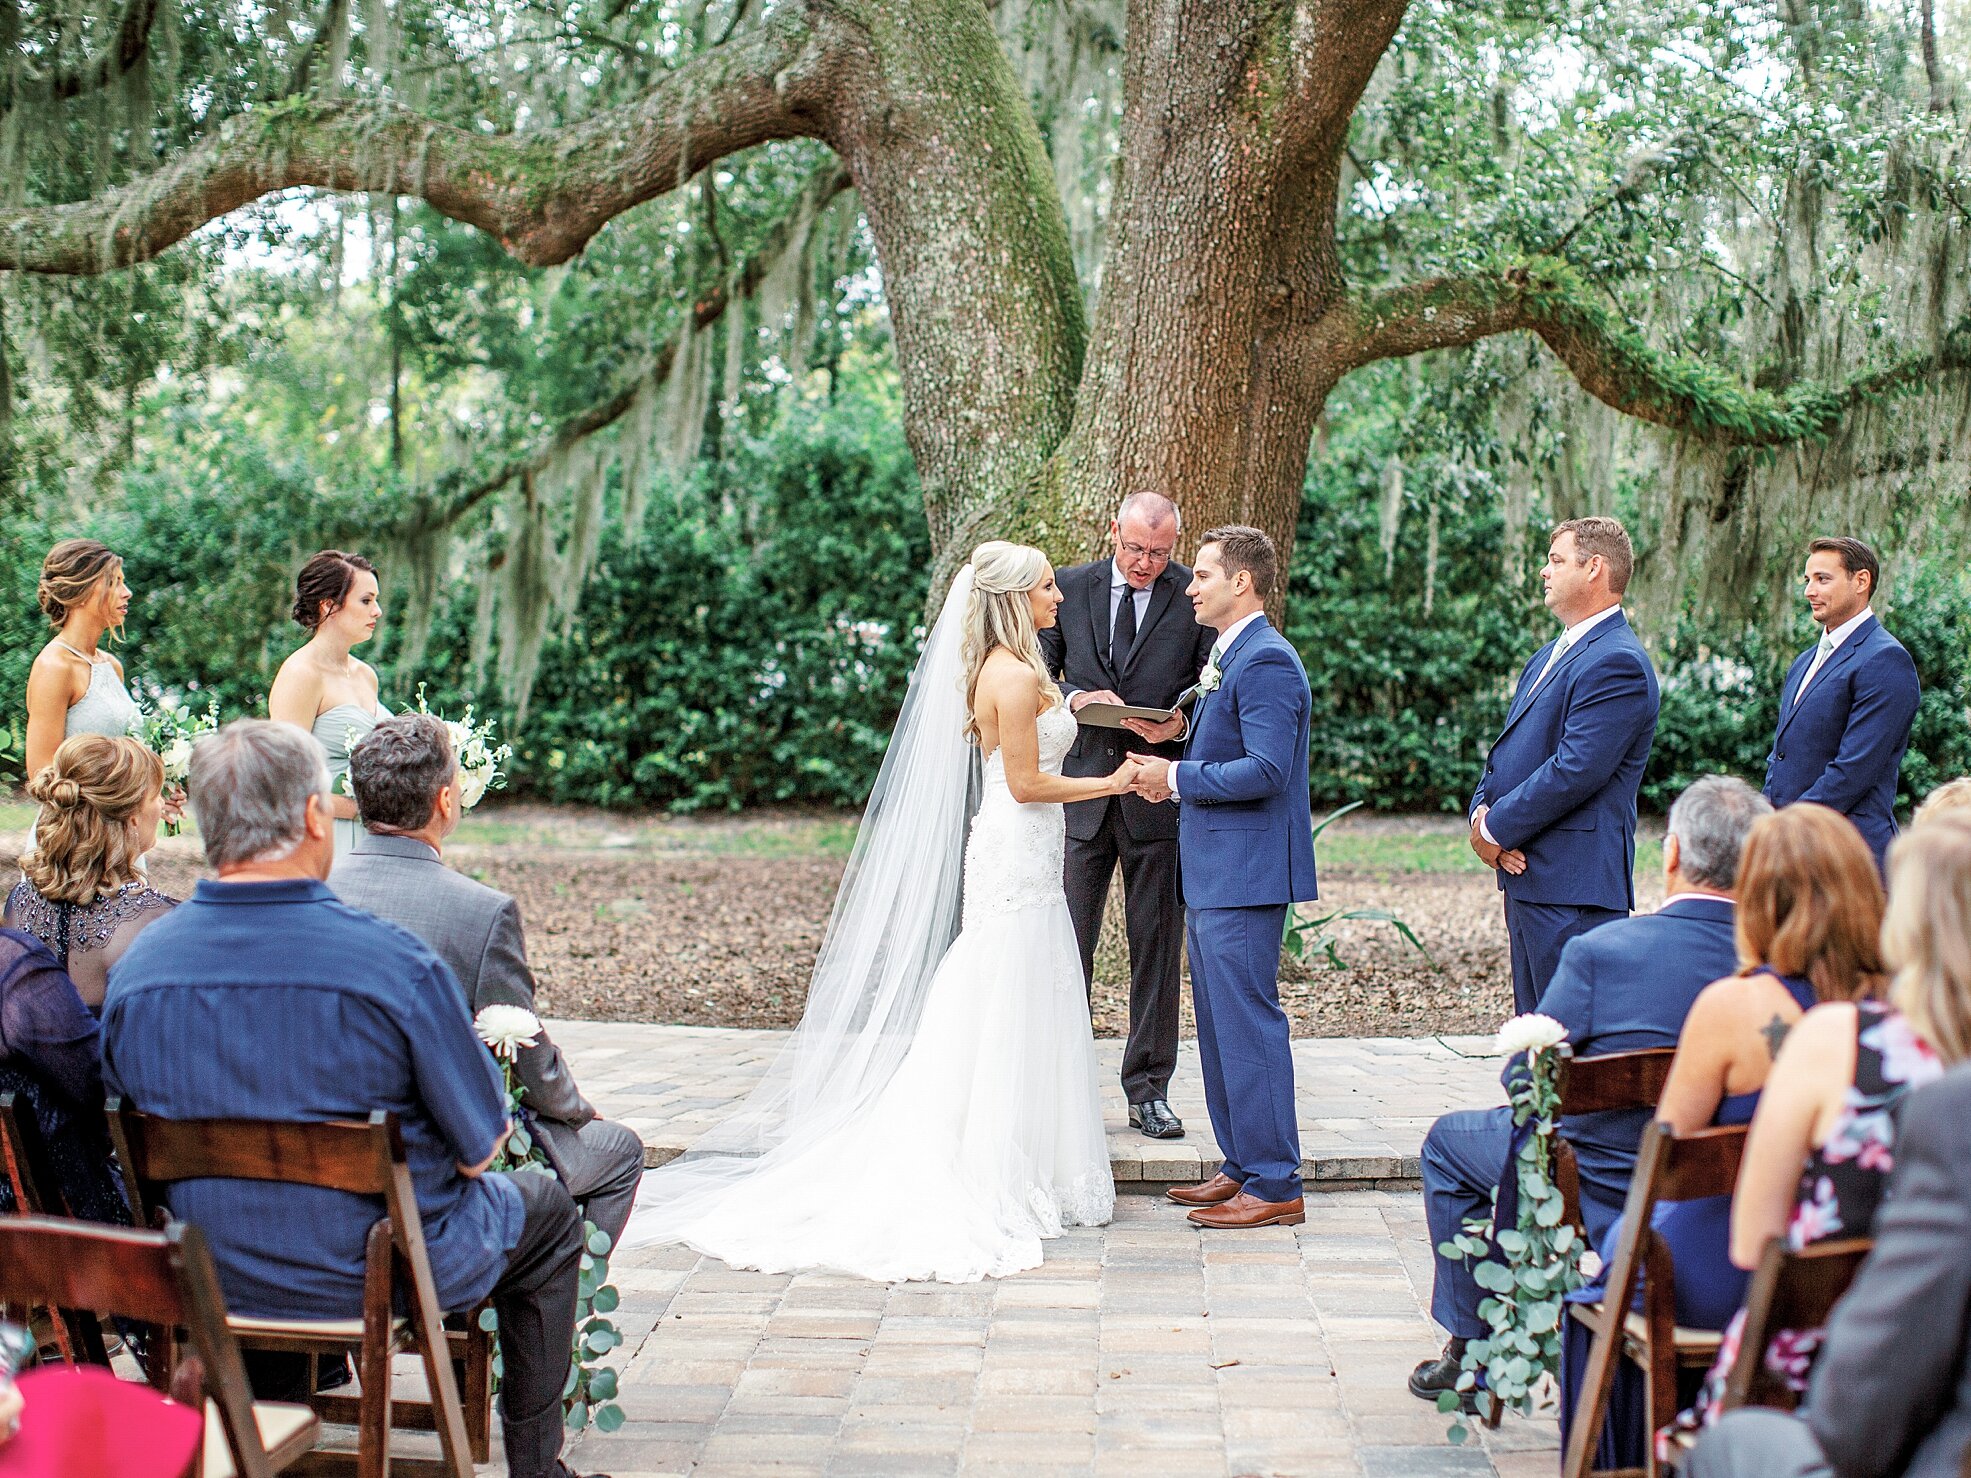 Lisa Silva Photography- Jacksonville, St. Augustine, Ponte Vedra Beach, Amelia Island, Florida Fine Art Film Wedding Photography- Wedding at Bowing Oaks Plantation_0041.jpg